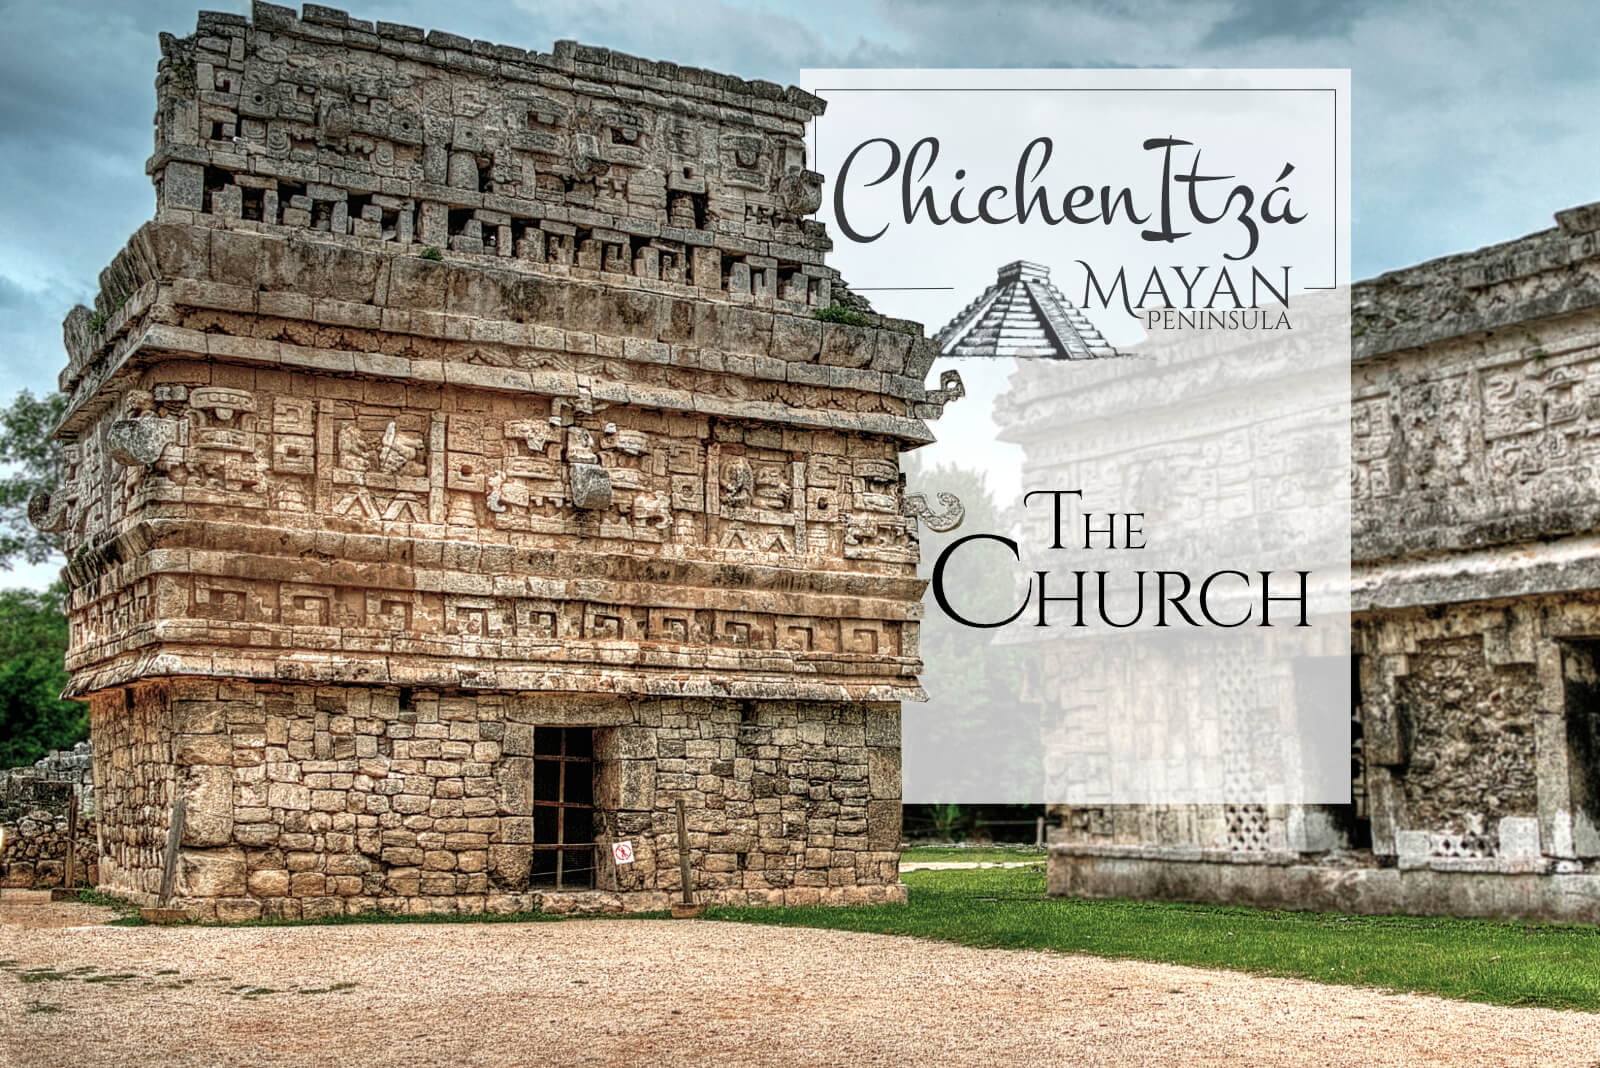 The Church in Chichen Itza